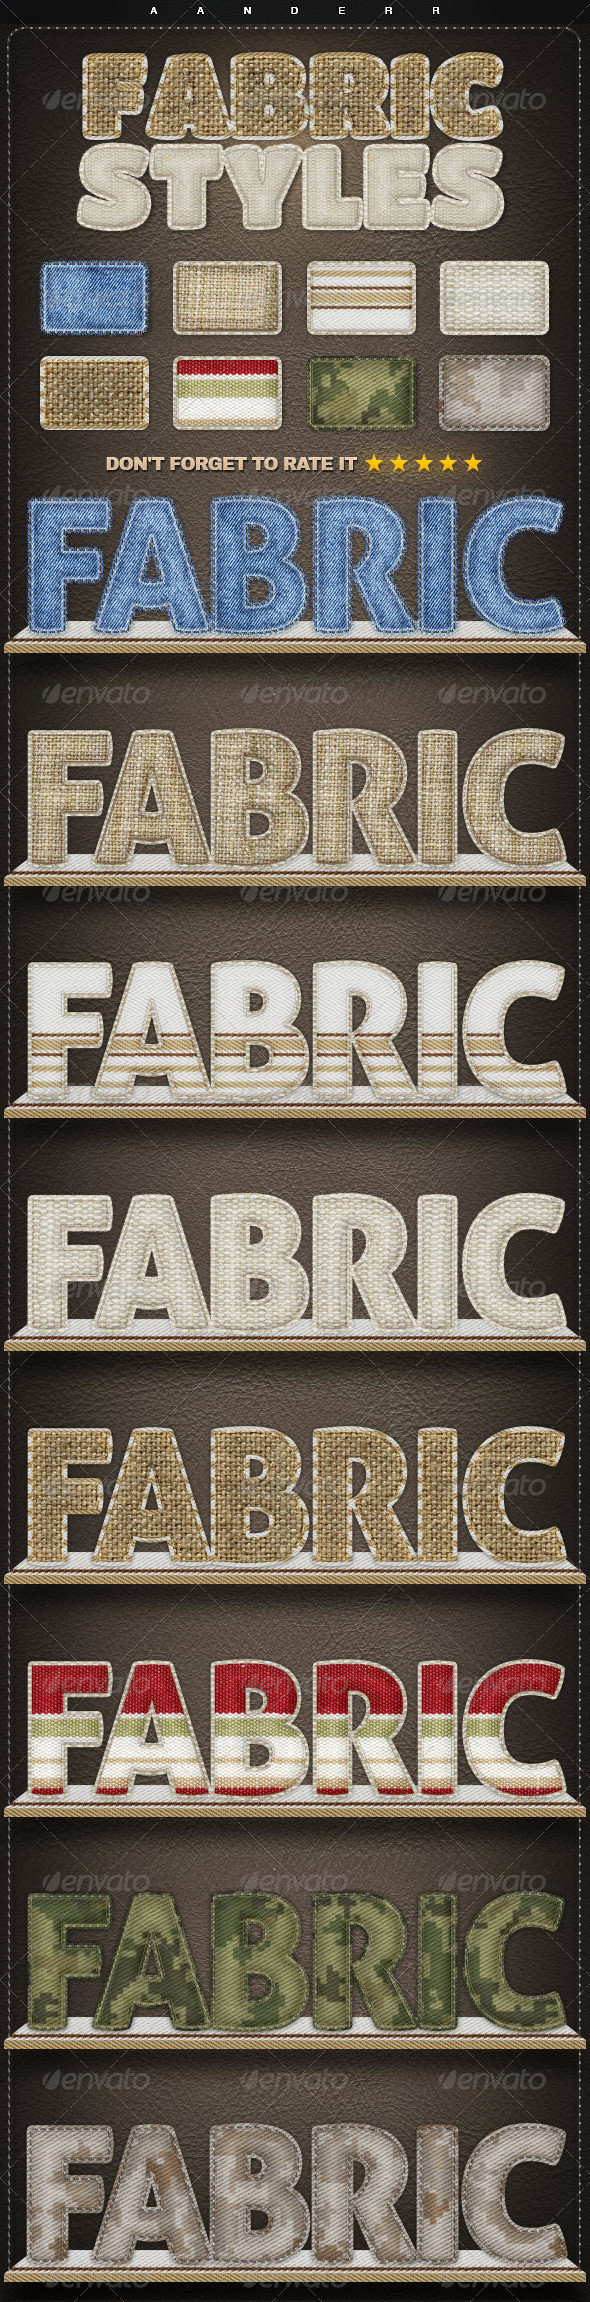 Fabric styles pw